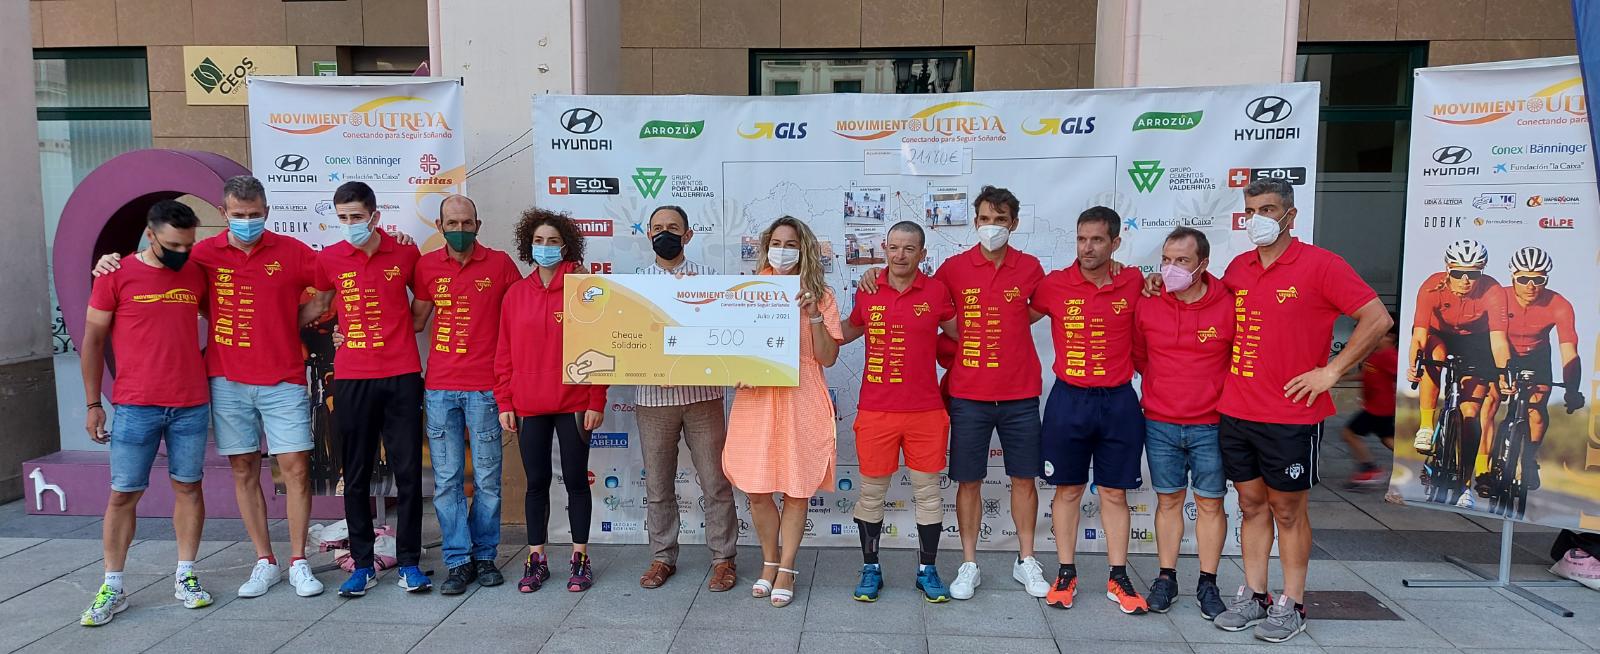 La vuelta ciclista del Movimiento Ultreya dona 500 euros a Cáritas Huesca